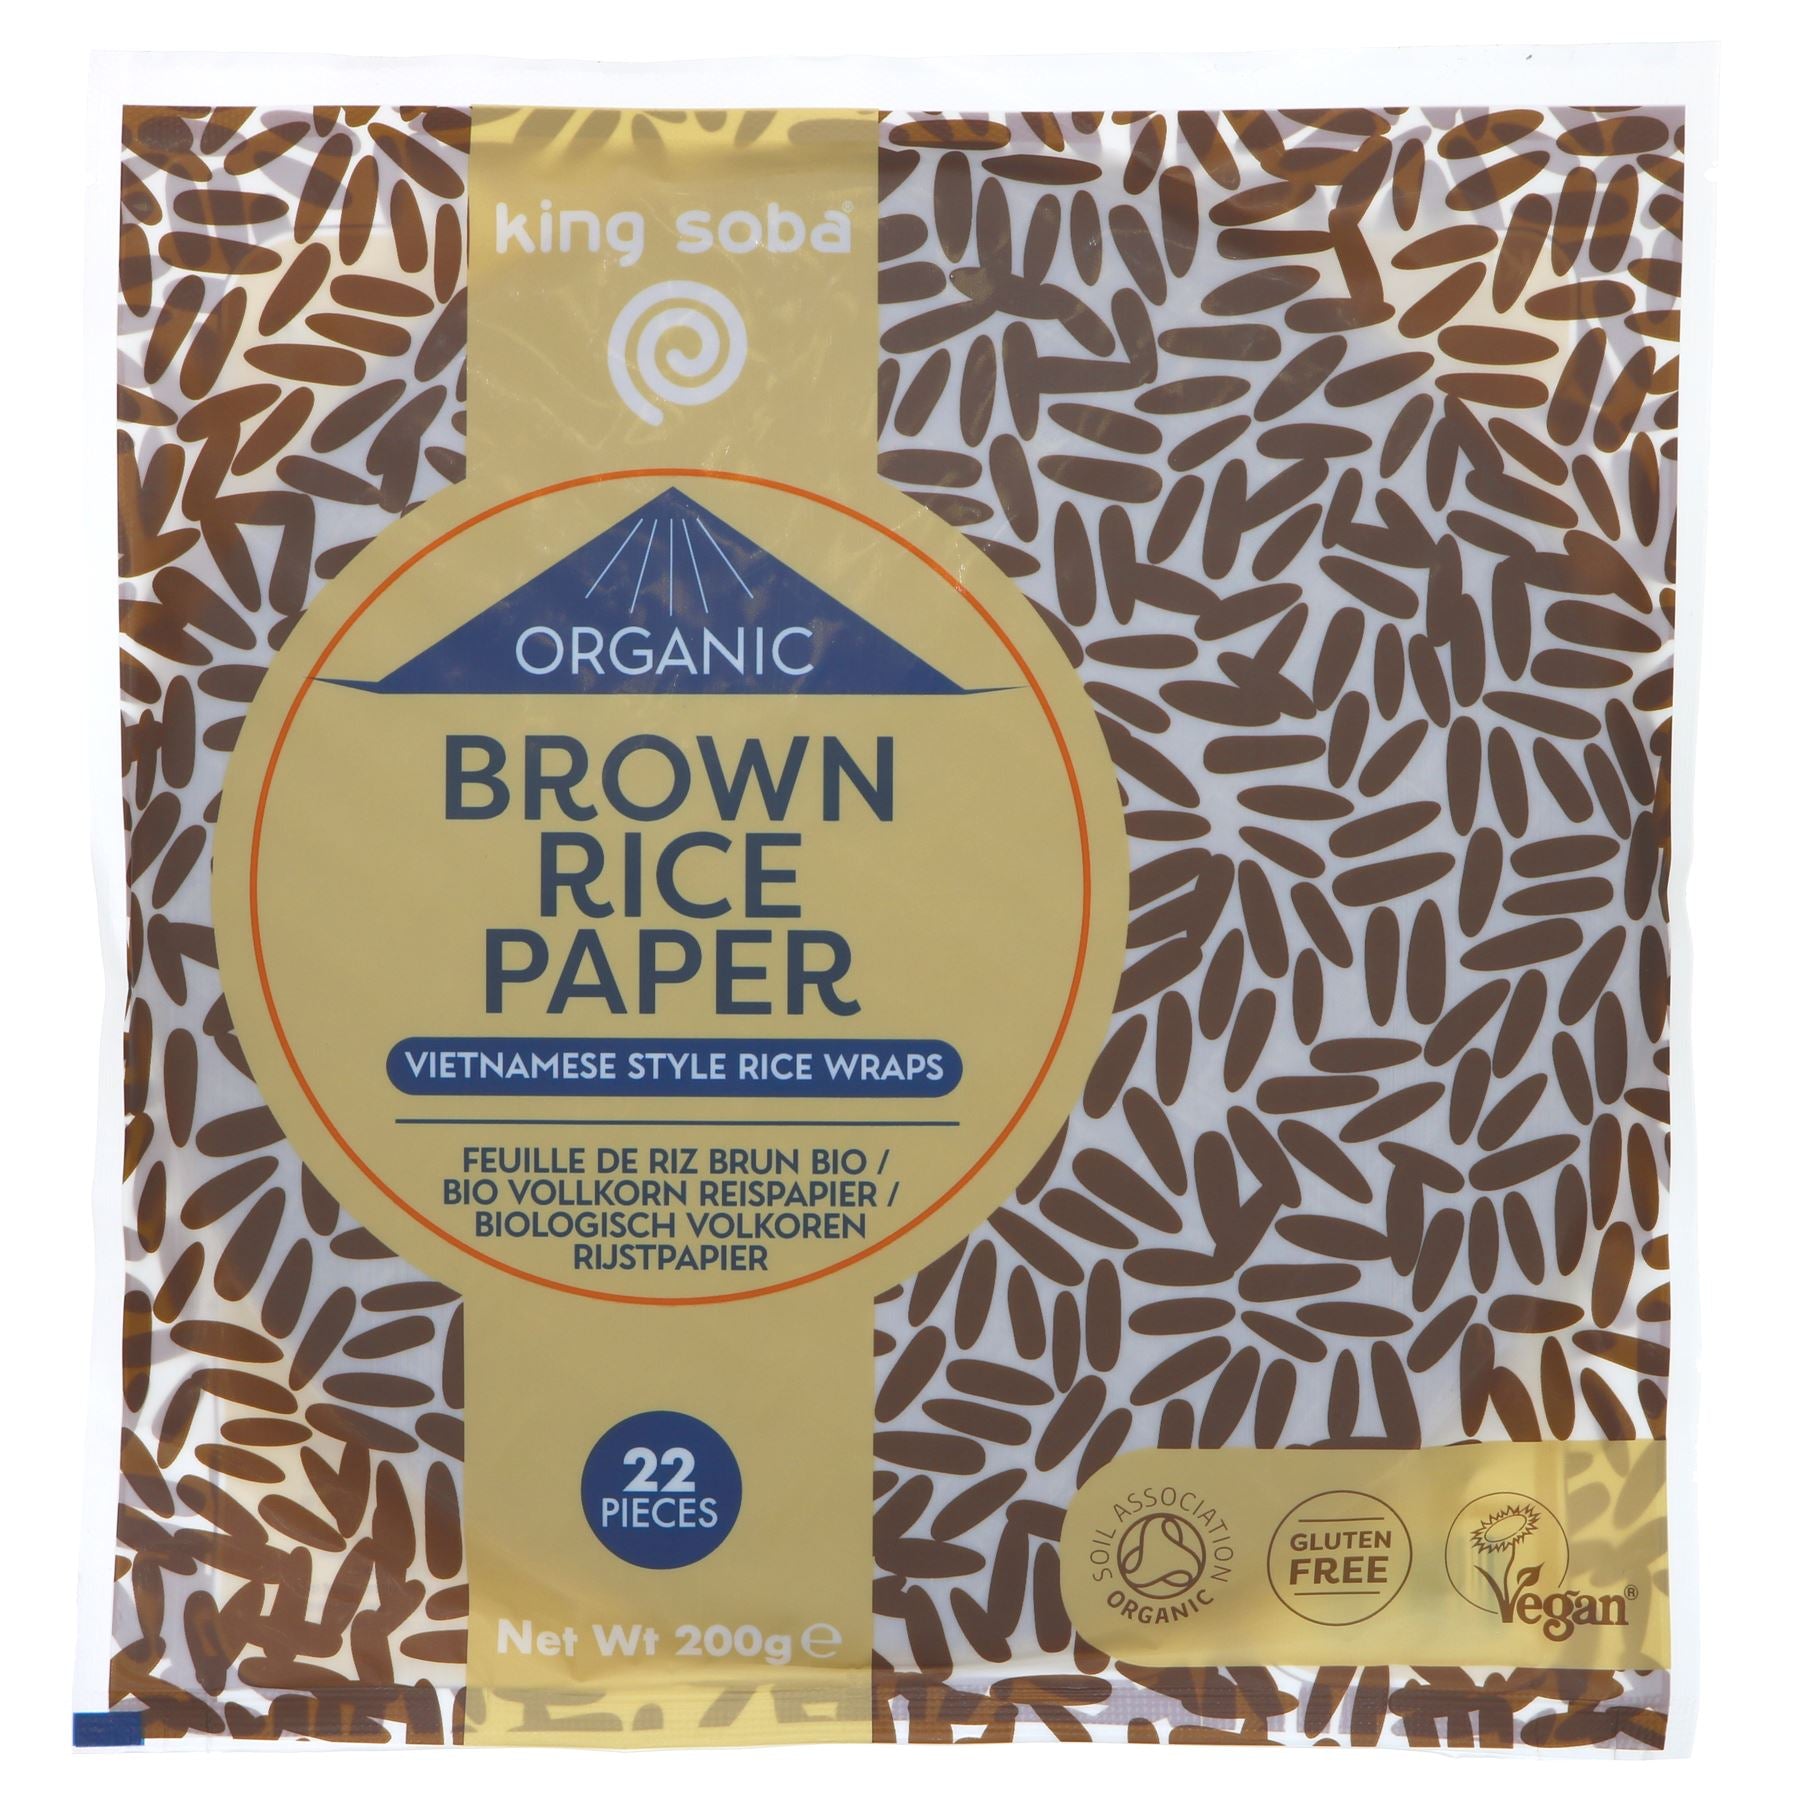 Kingsoba Organic brown rice paper Review